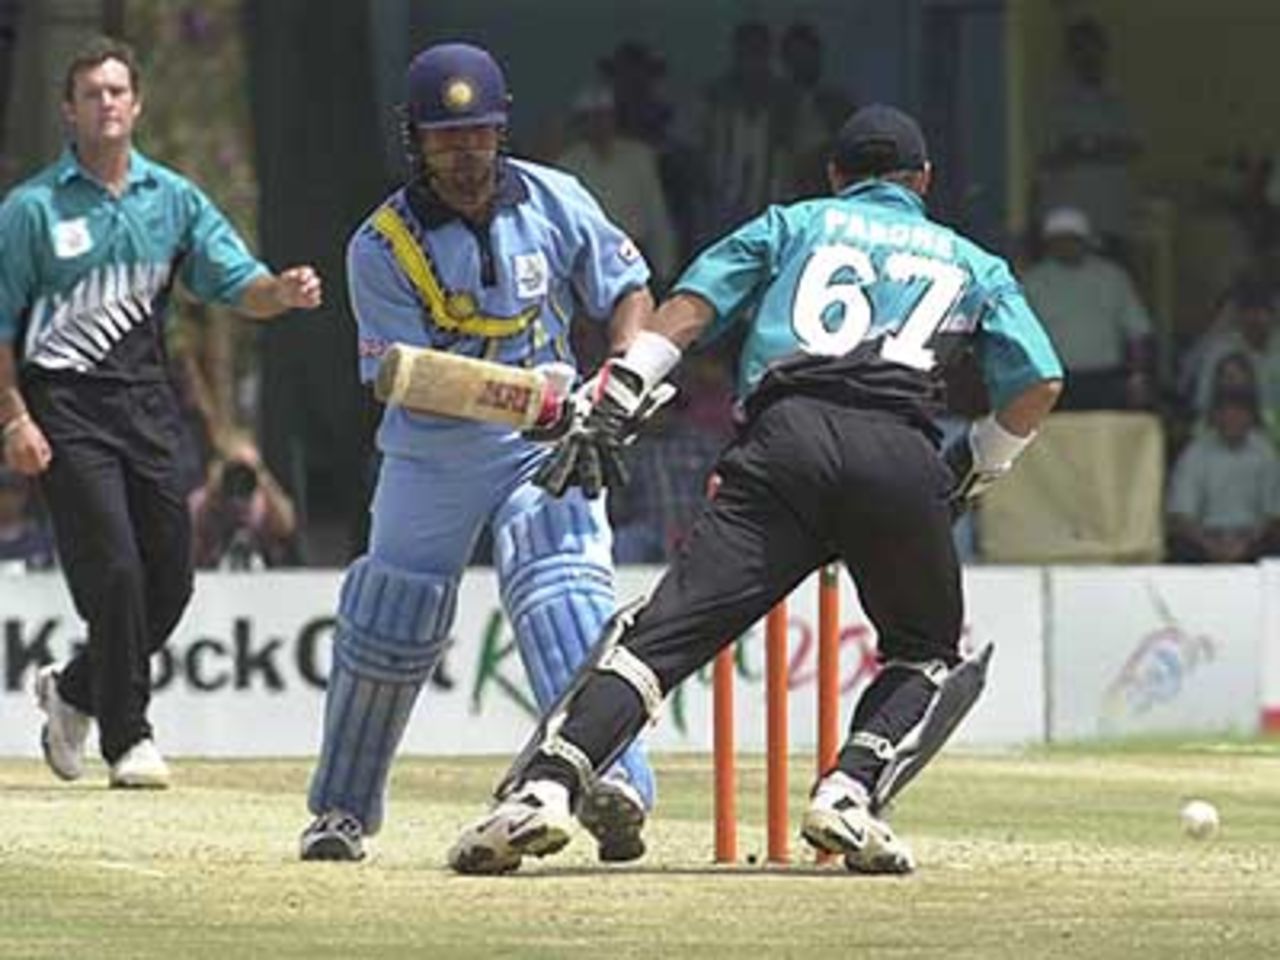 Sachin Tendulkar turns back to regain his ground as Parore and Astle watch, ICC KnockOut, 2000/01, Final, India v New Zealand, Gymkhana Club Ground, Nairobi, 15 October 2000.